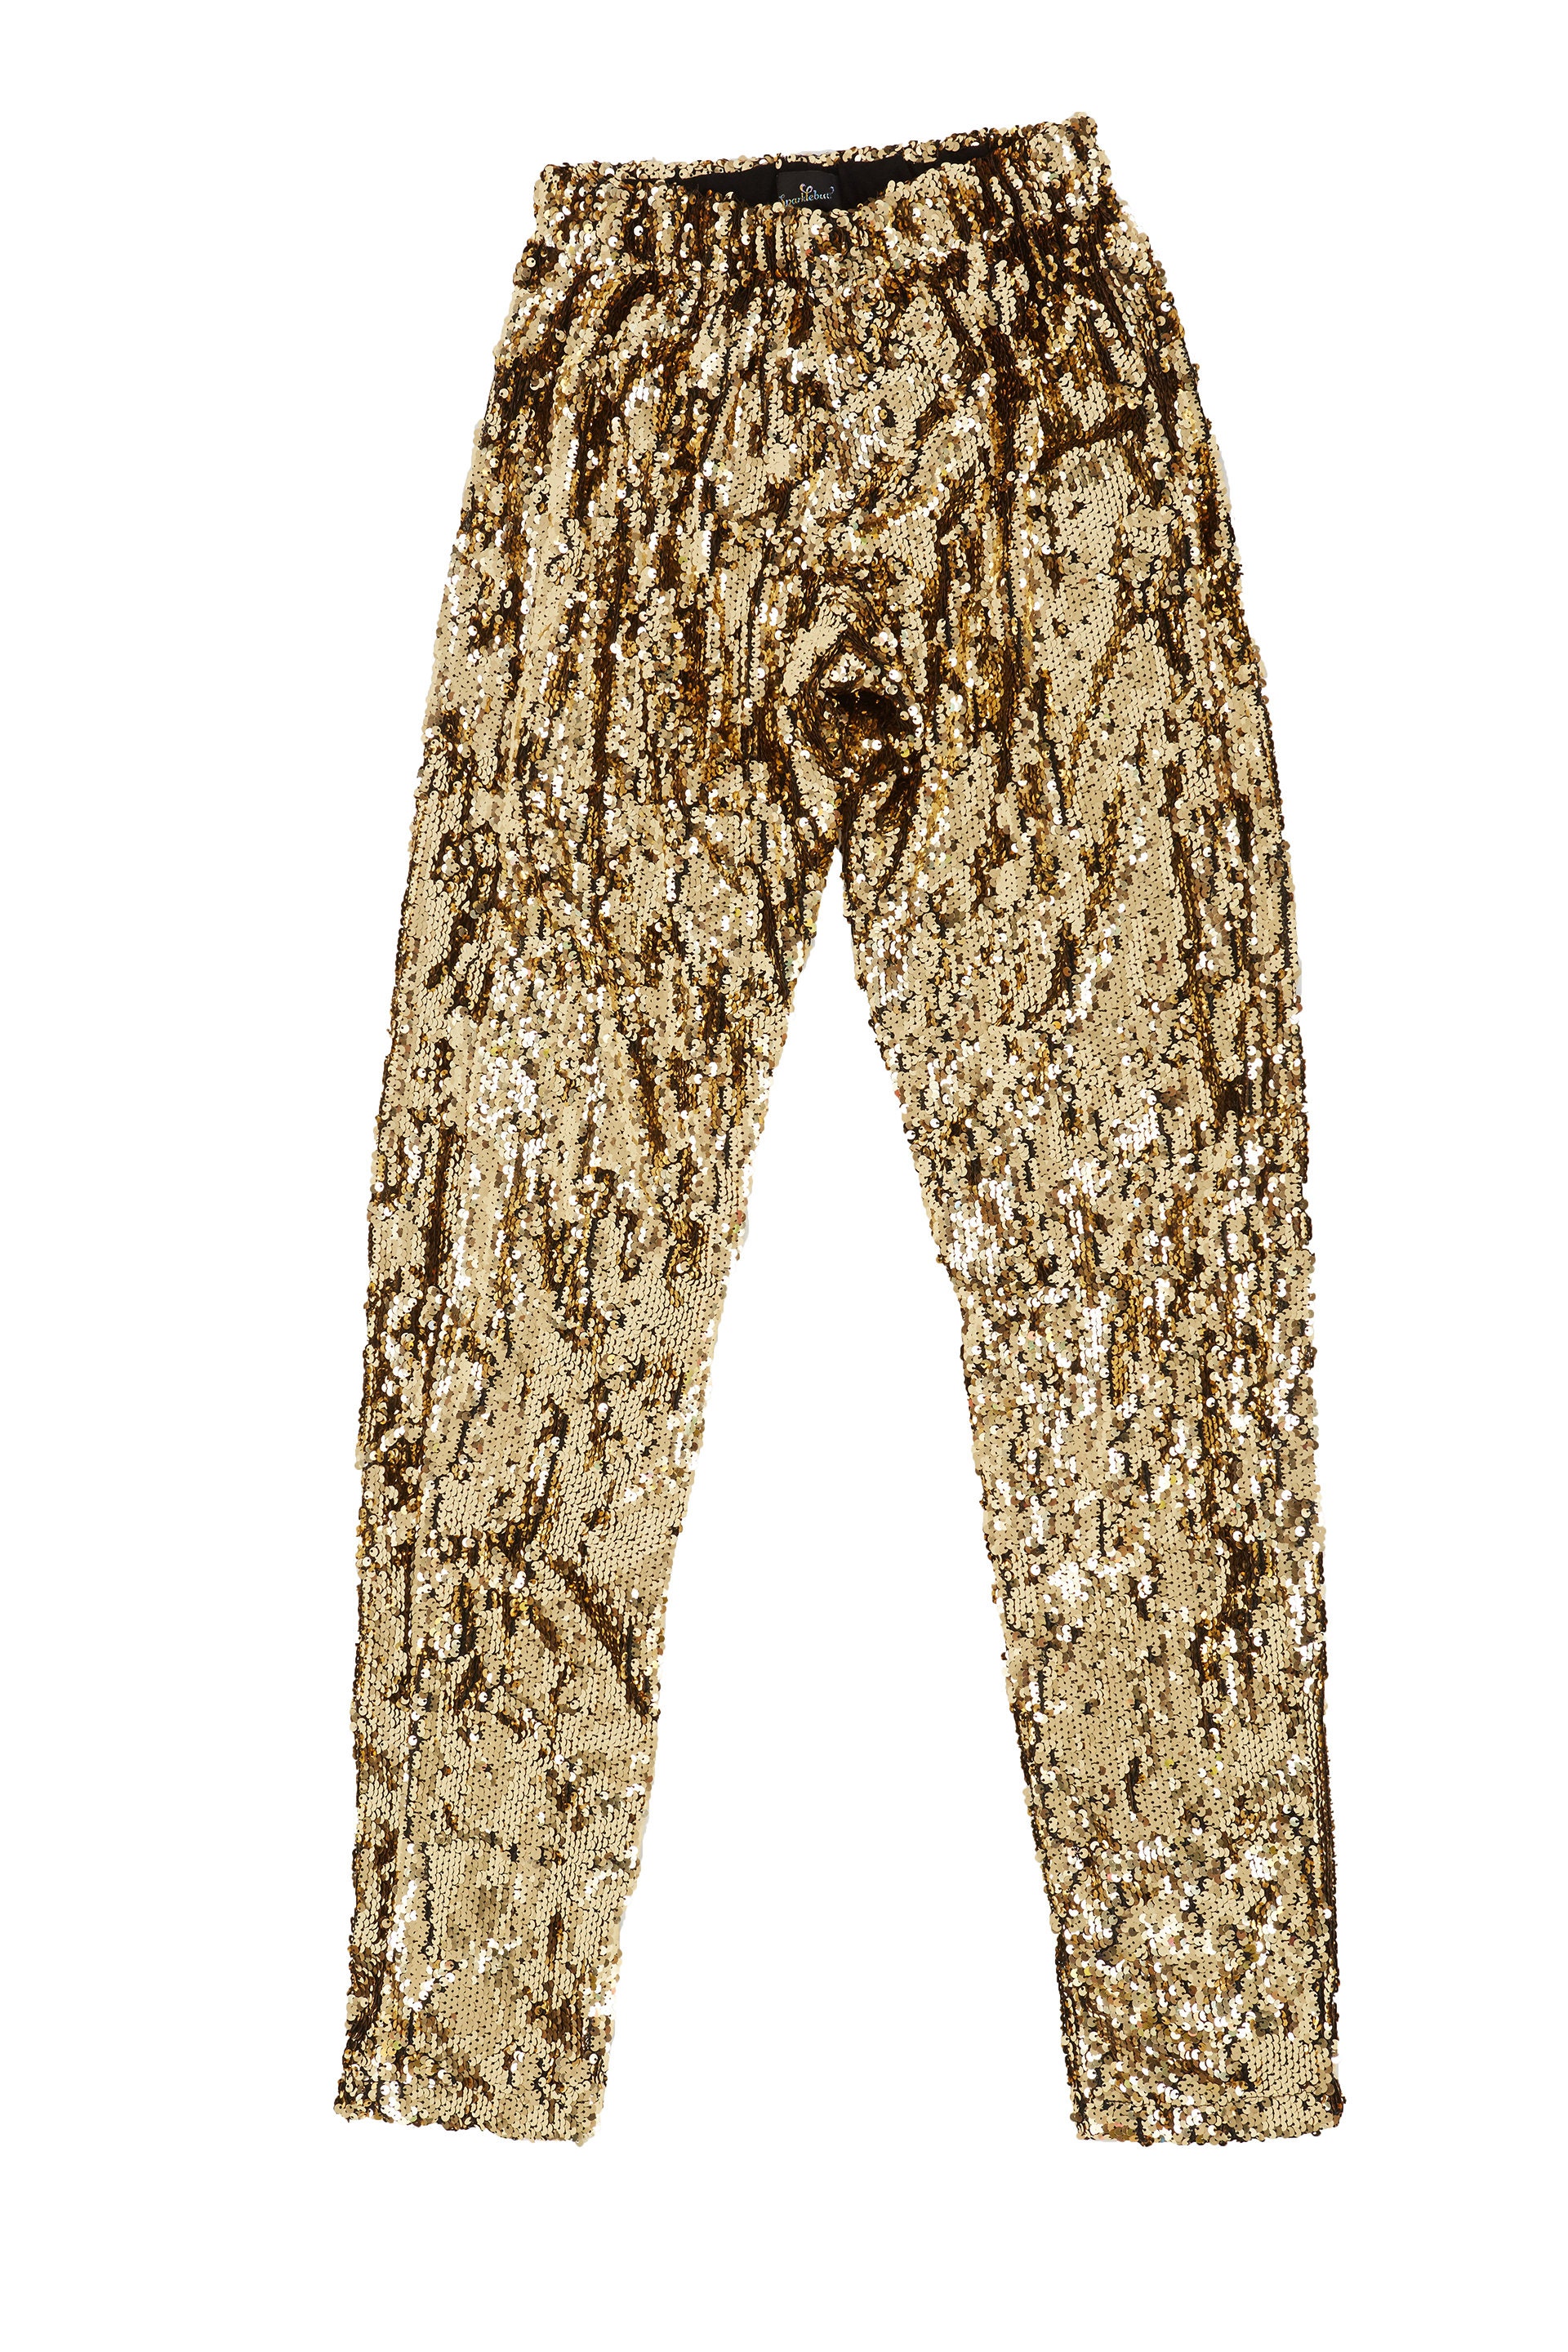 Mens Rave Clothing Burning Man Leggings Gold Sequin Pants - Etsy UK